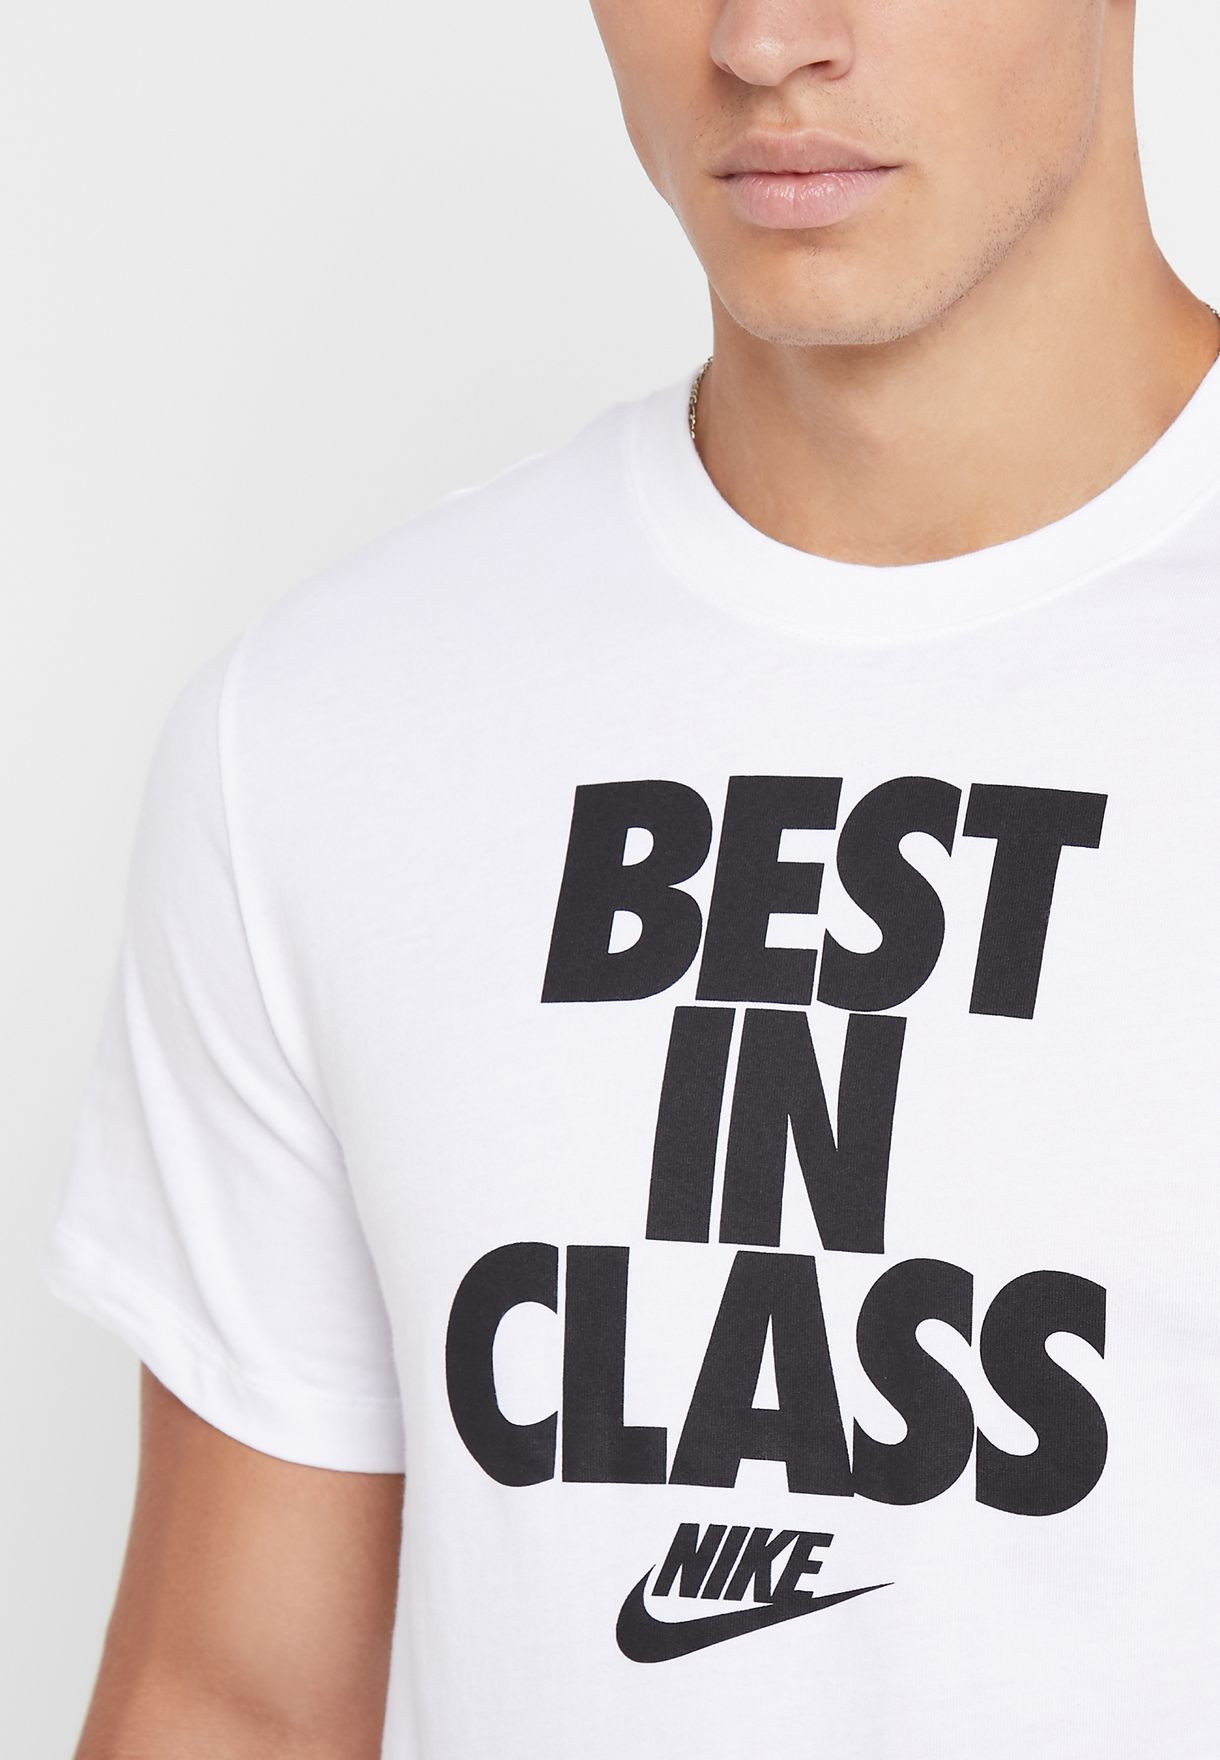 nike best in class t shirt